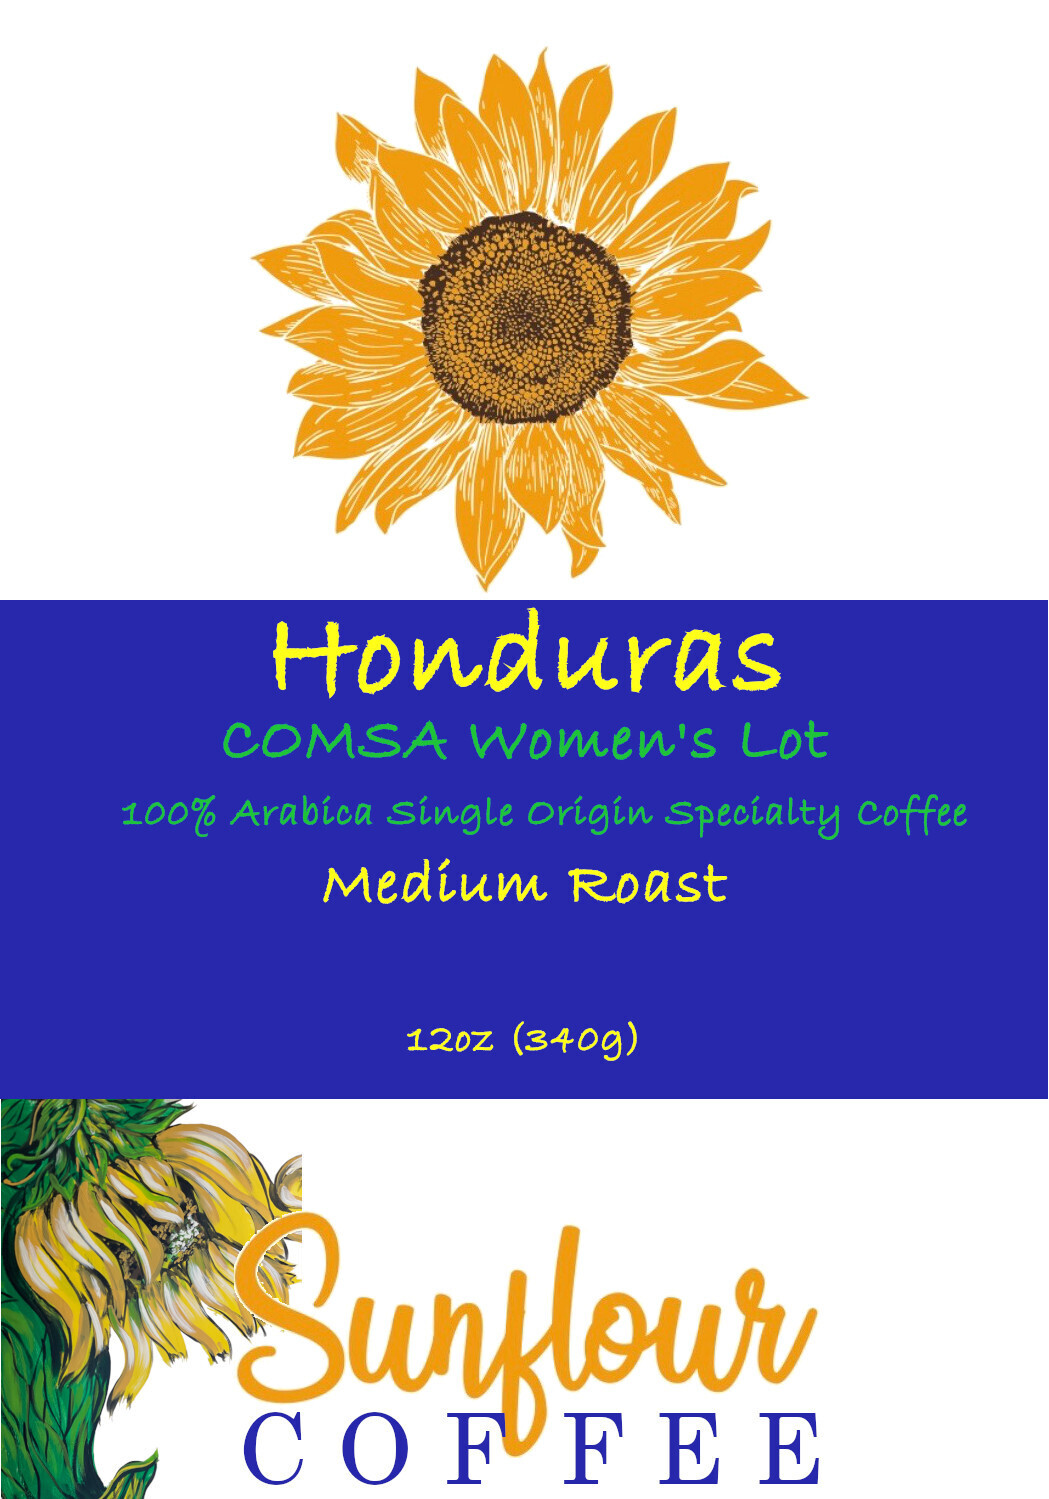 Honduras COMSA Women's Lot